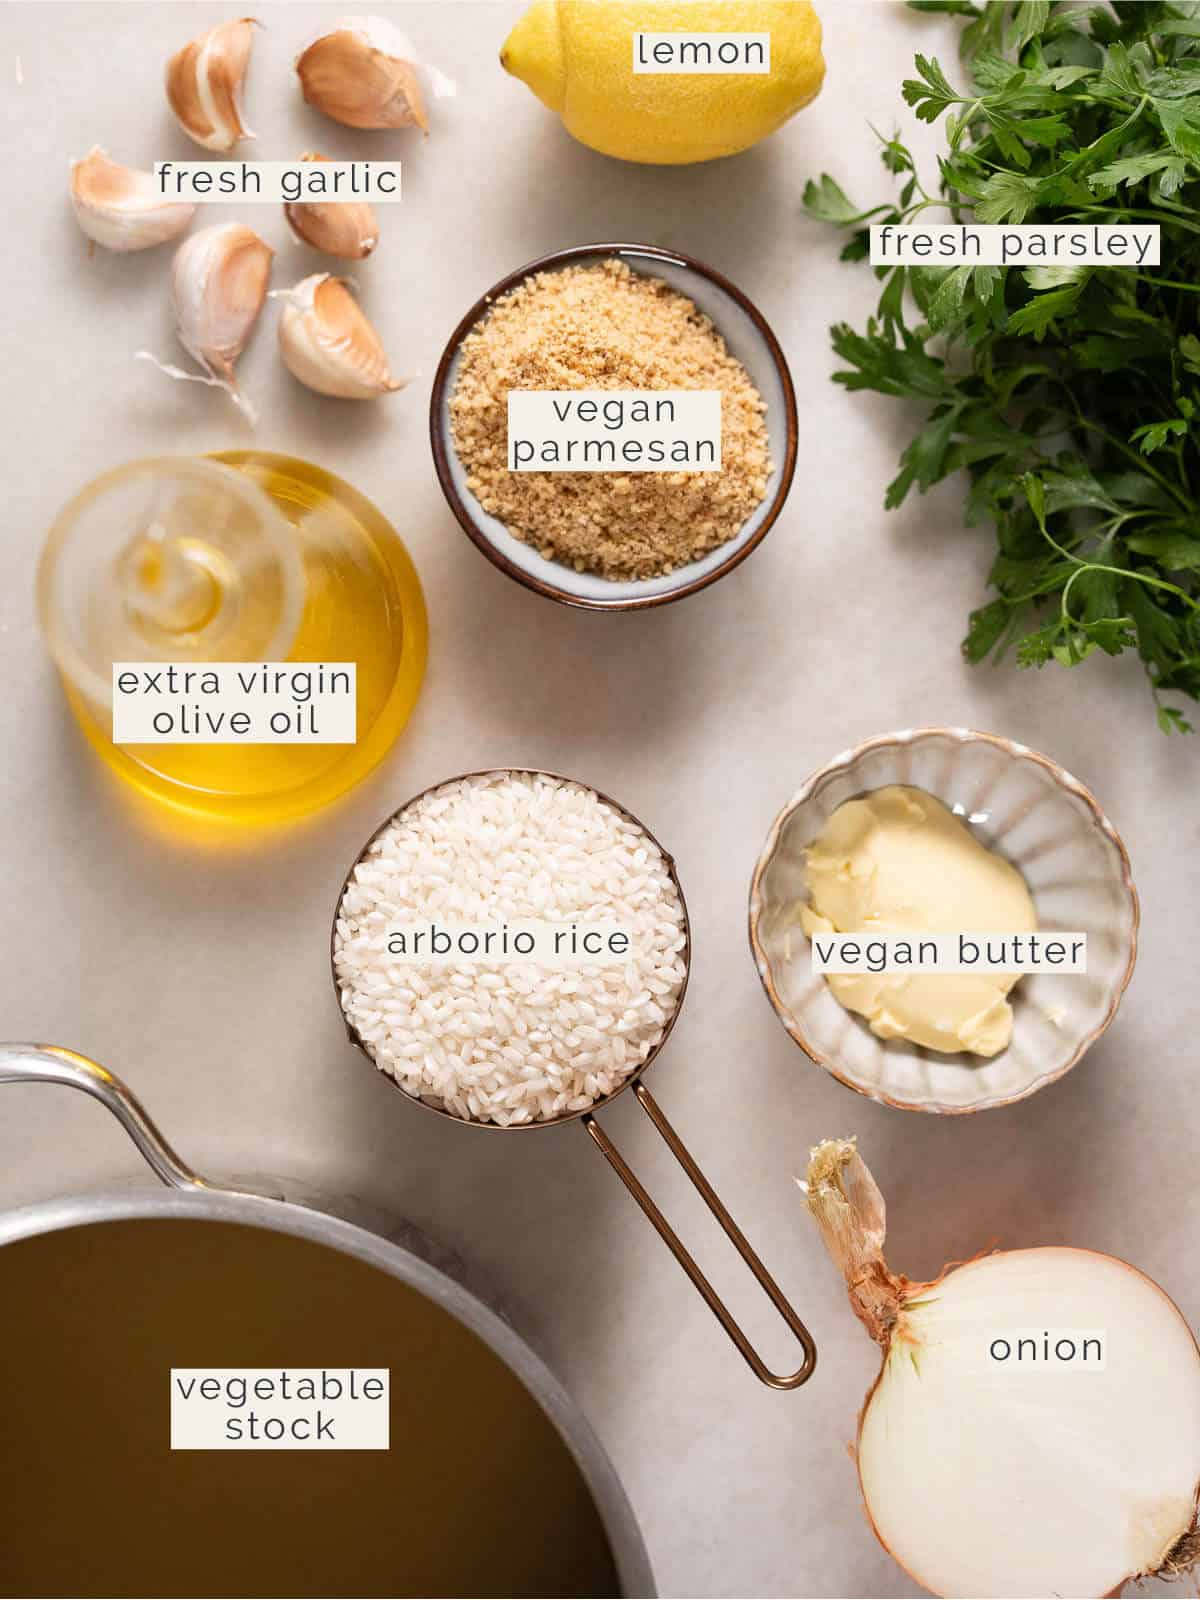 garlic risotto recipe ingredients.